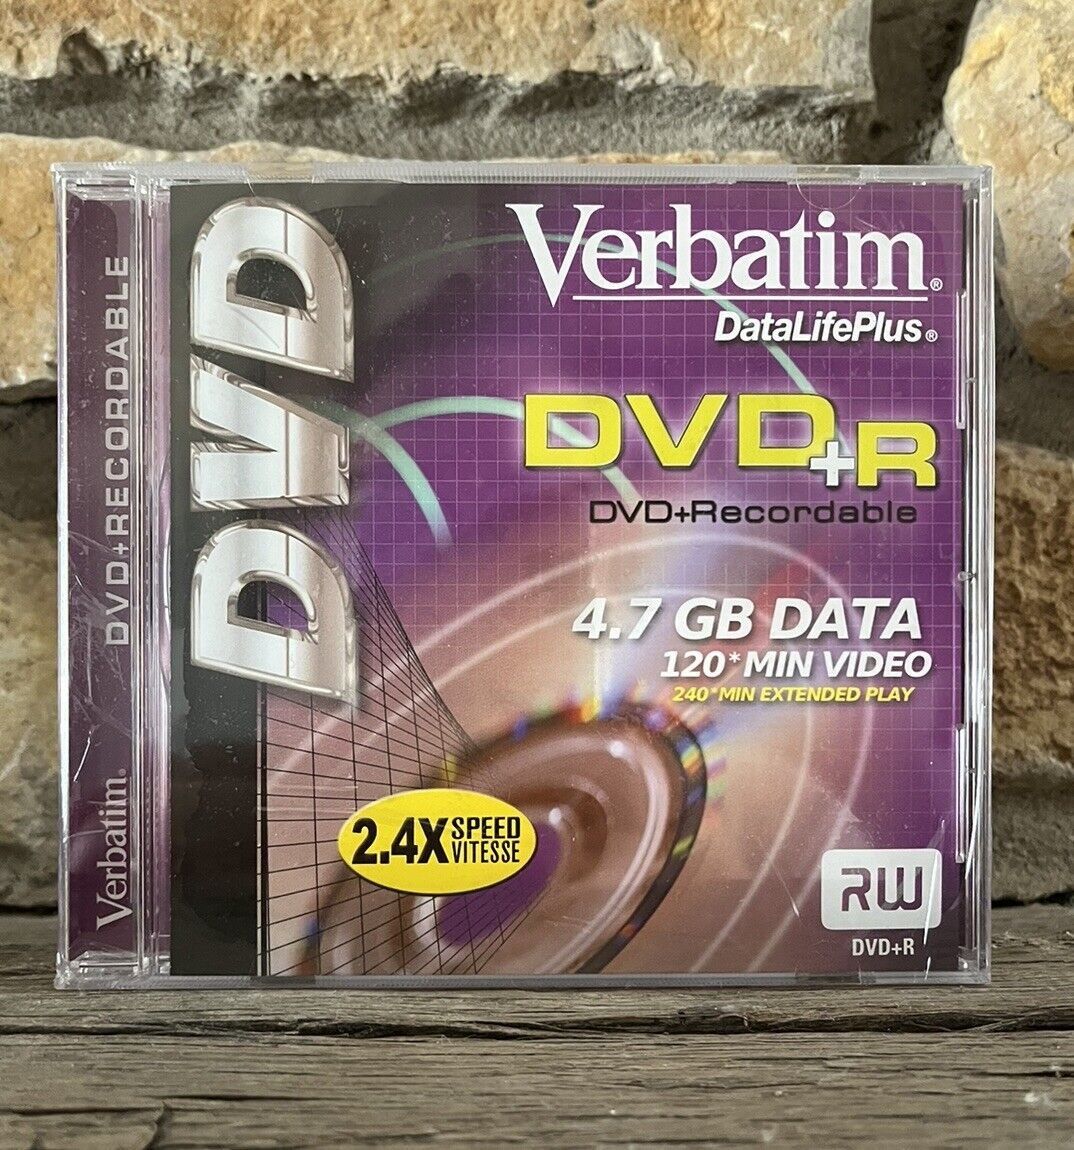 3 - Verbatim DataLifePlus DVD+R Recordable 4.7 GB Data 120min 2.4x Video DVD RW